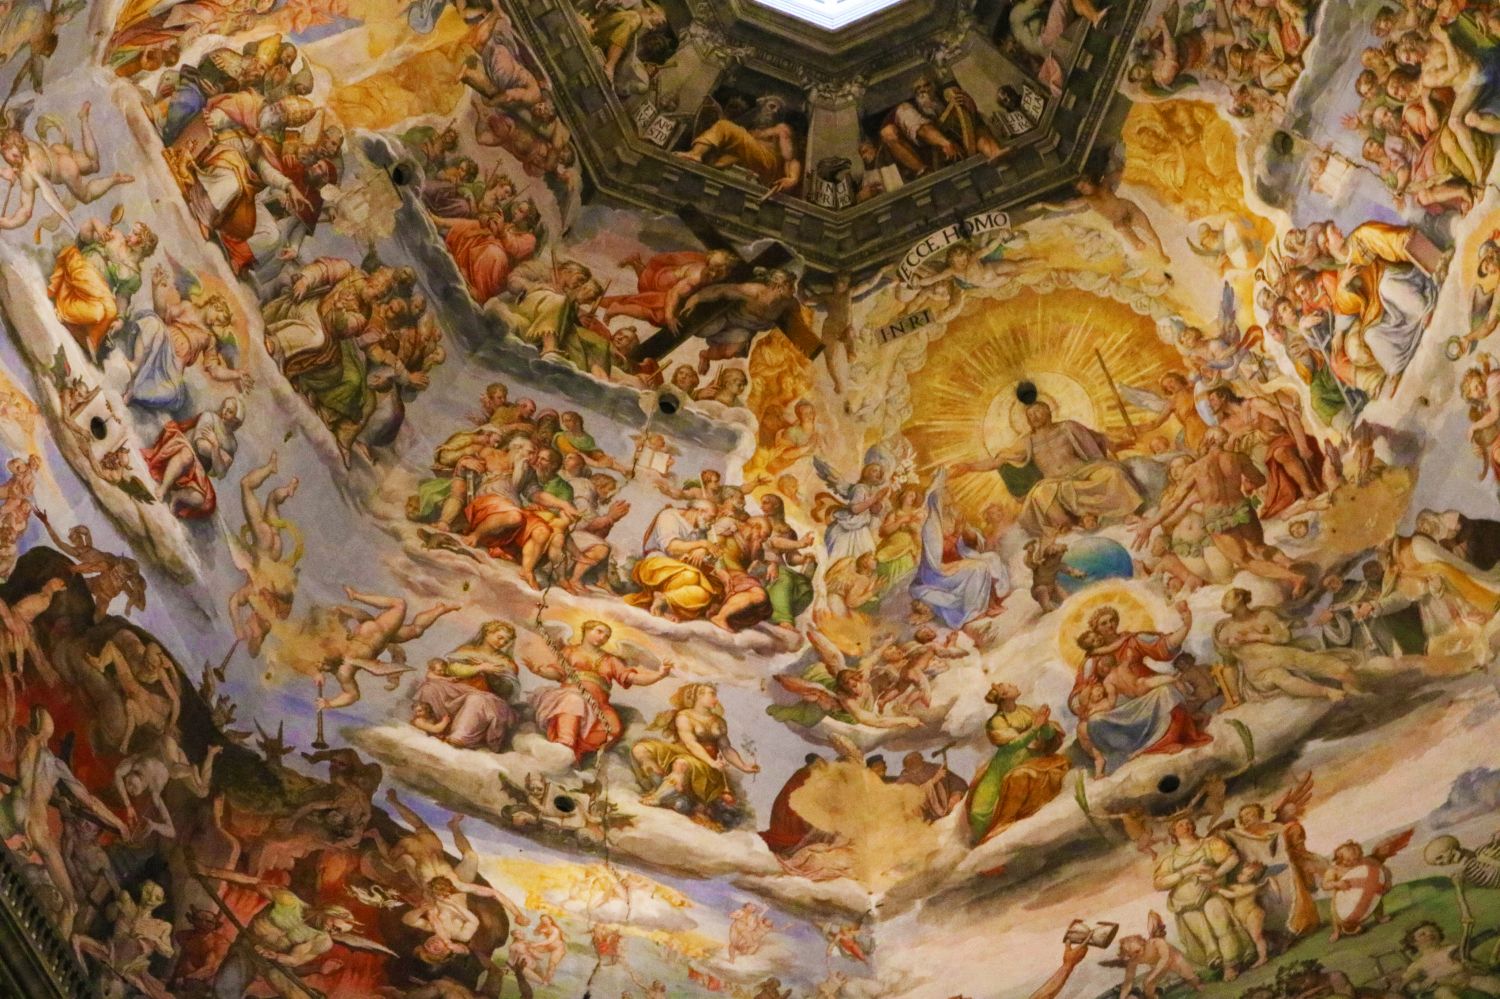 The frescoes inside the duomo